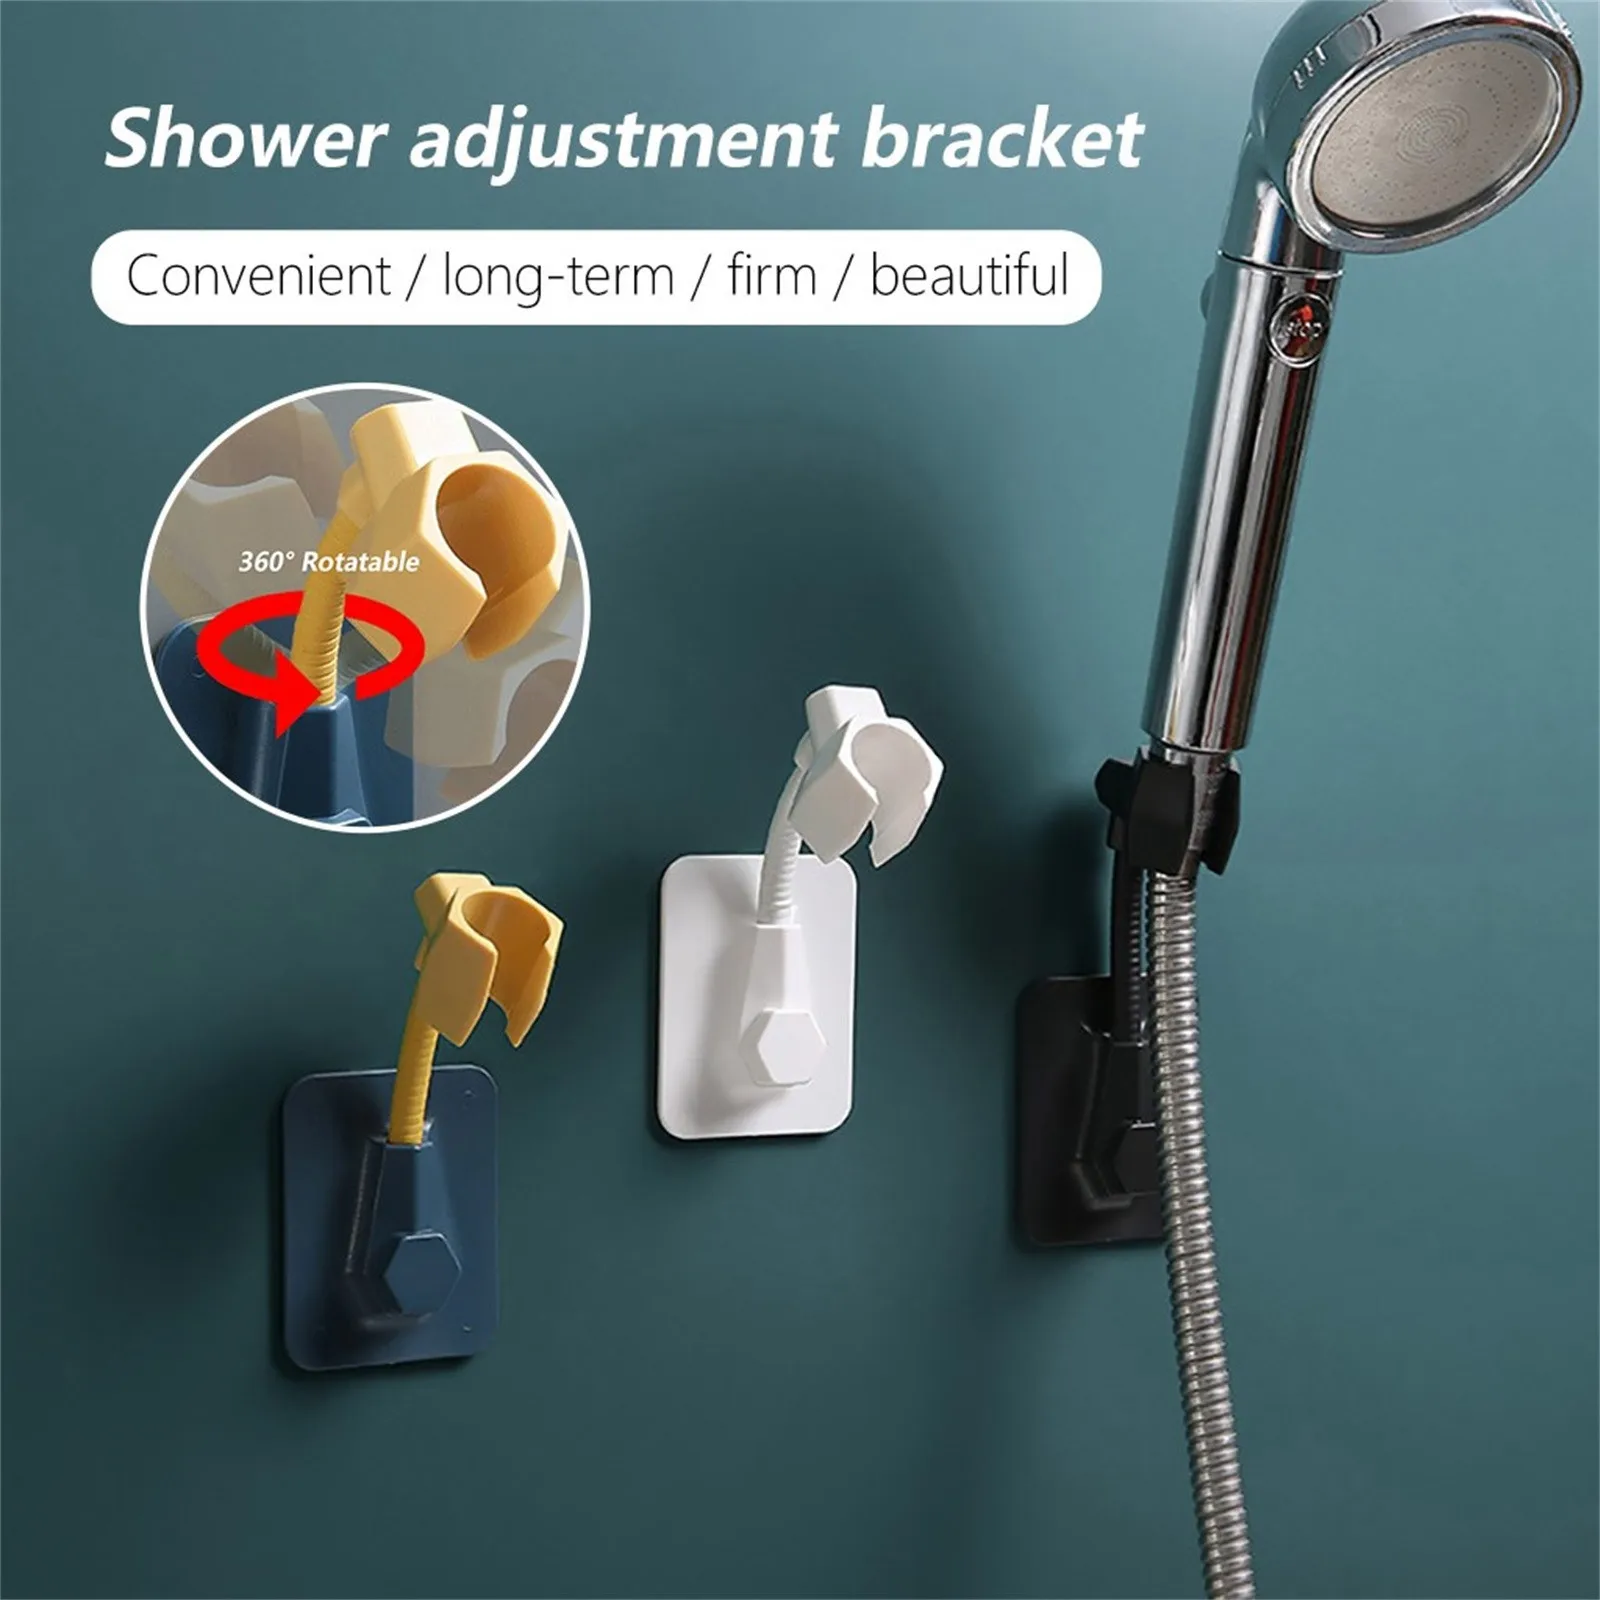 Universal Adjustable Shower Bracket Stand Holder Rotatable for Bathroom Home Kit 